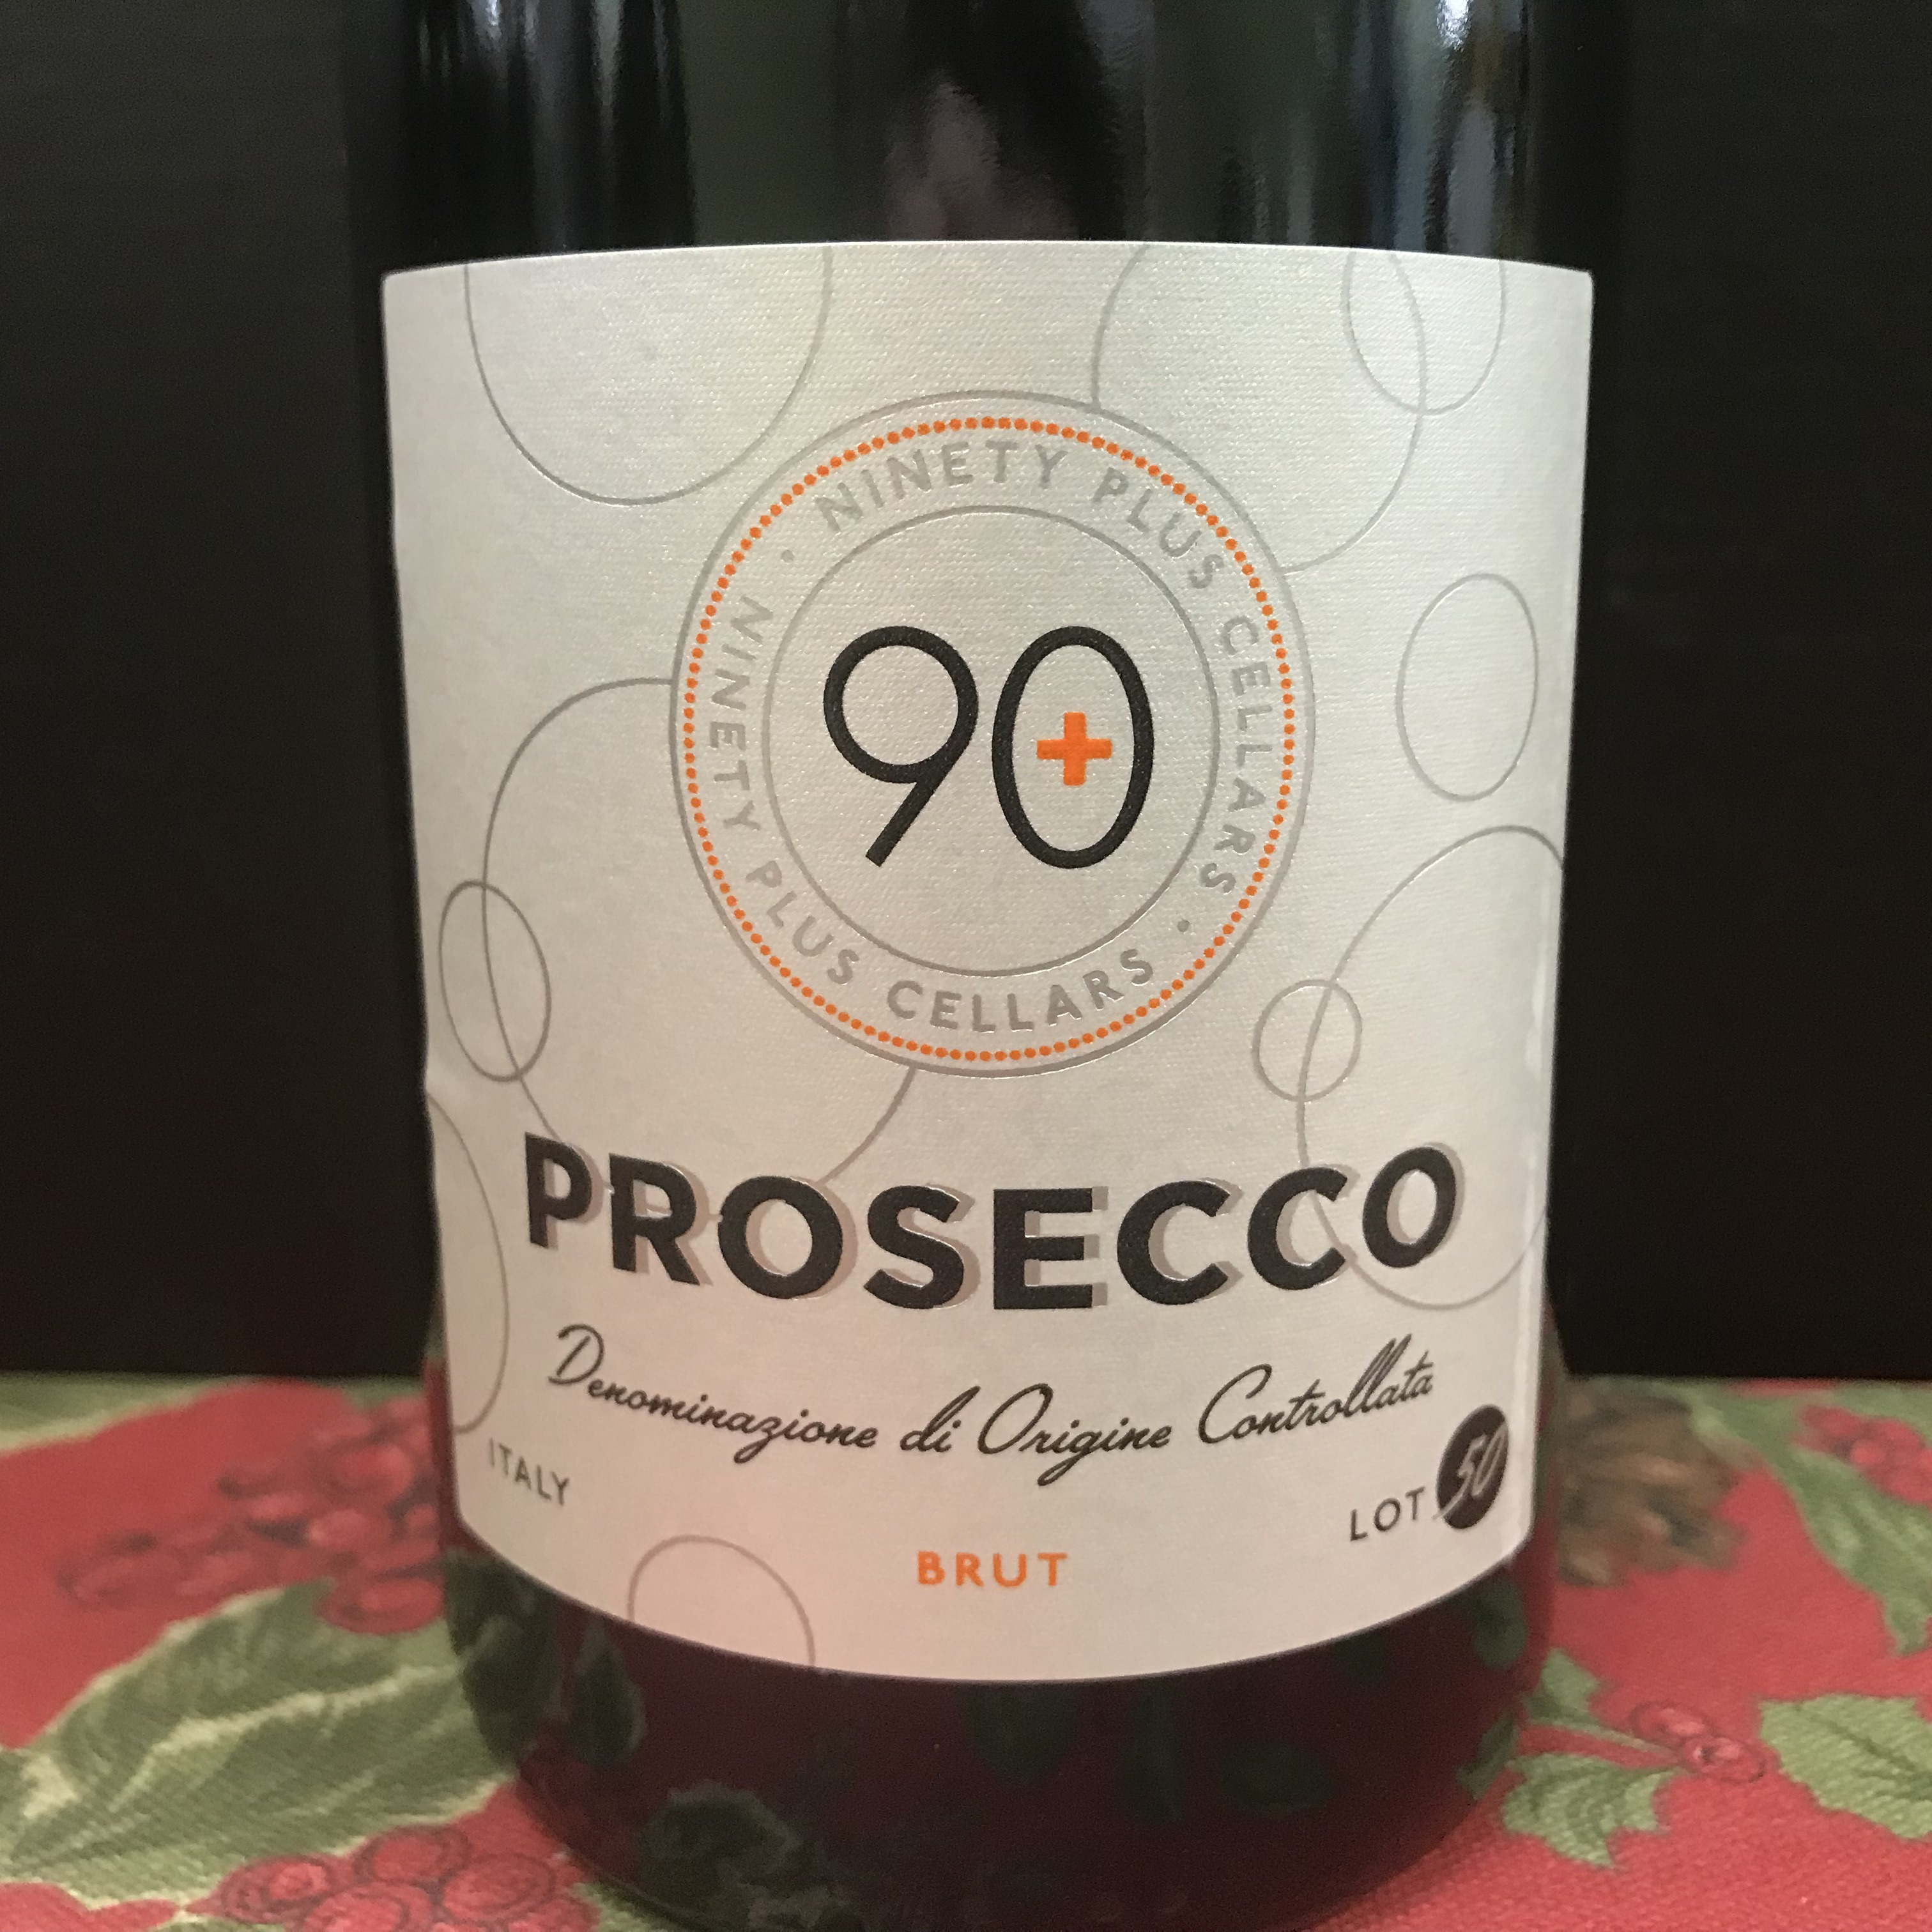 90+ Cellars Prosecco Brut